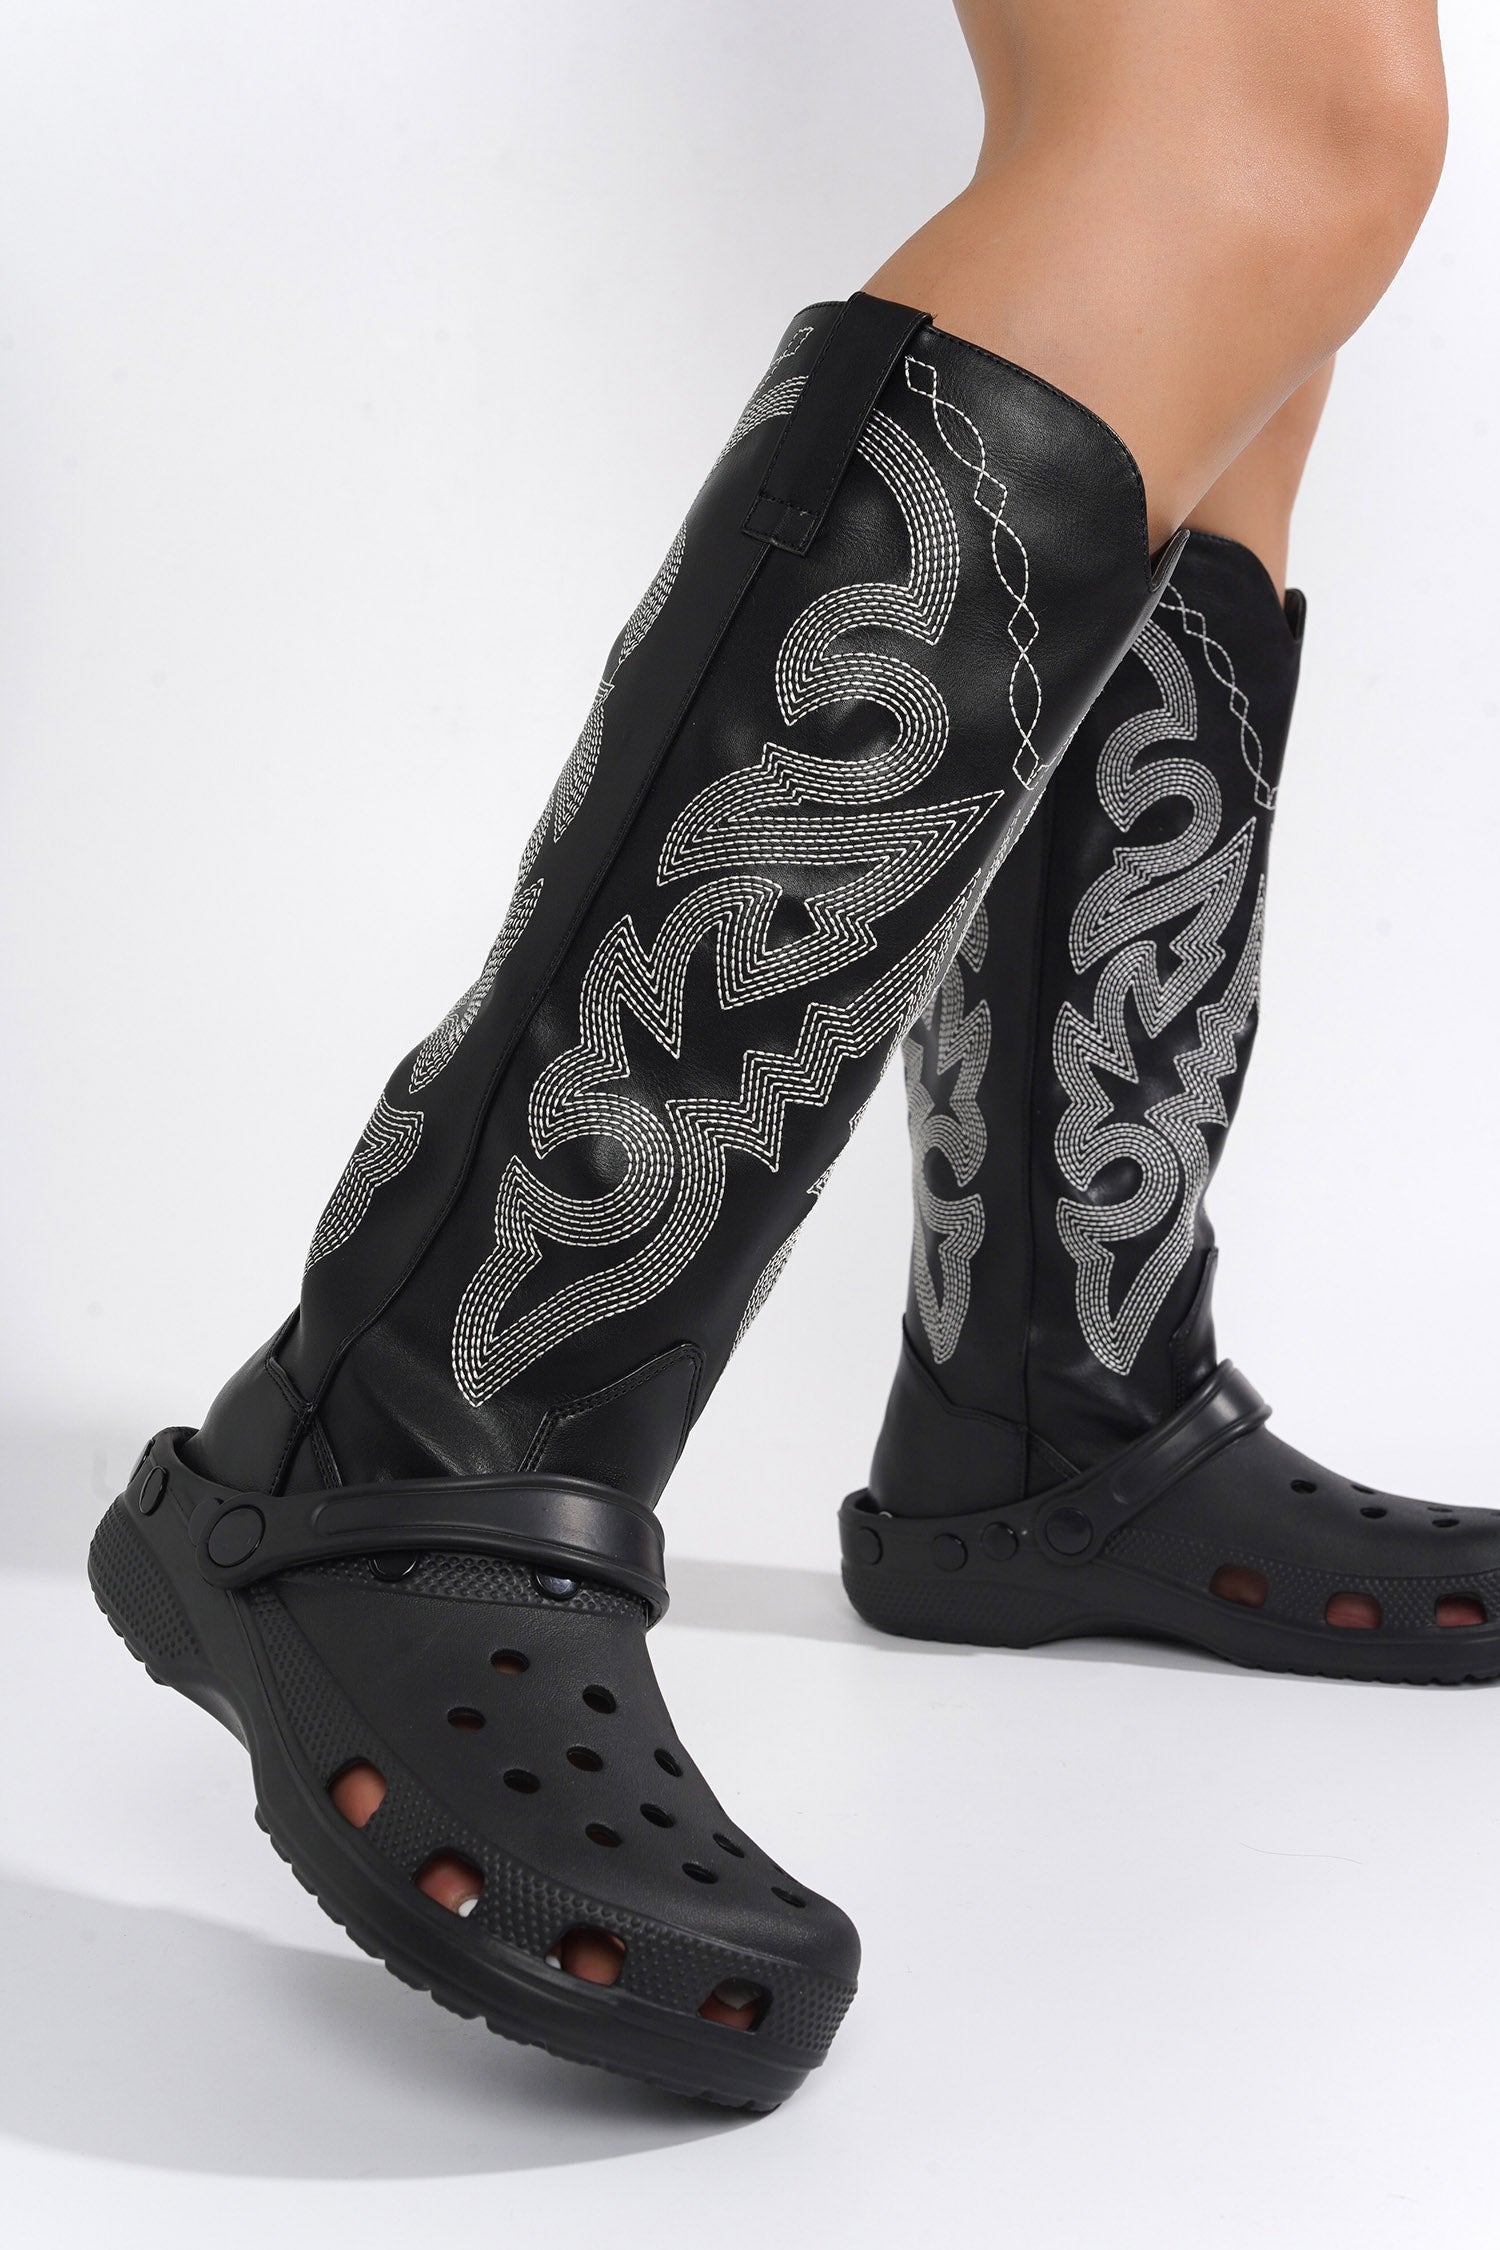 UrbanOG - Haria Western-Inspired Garden Sandal Boots - BOOTIES